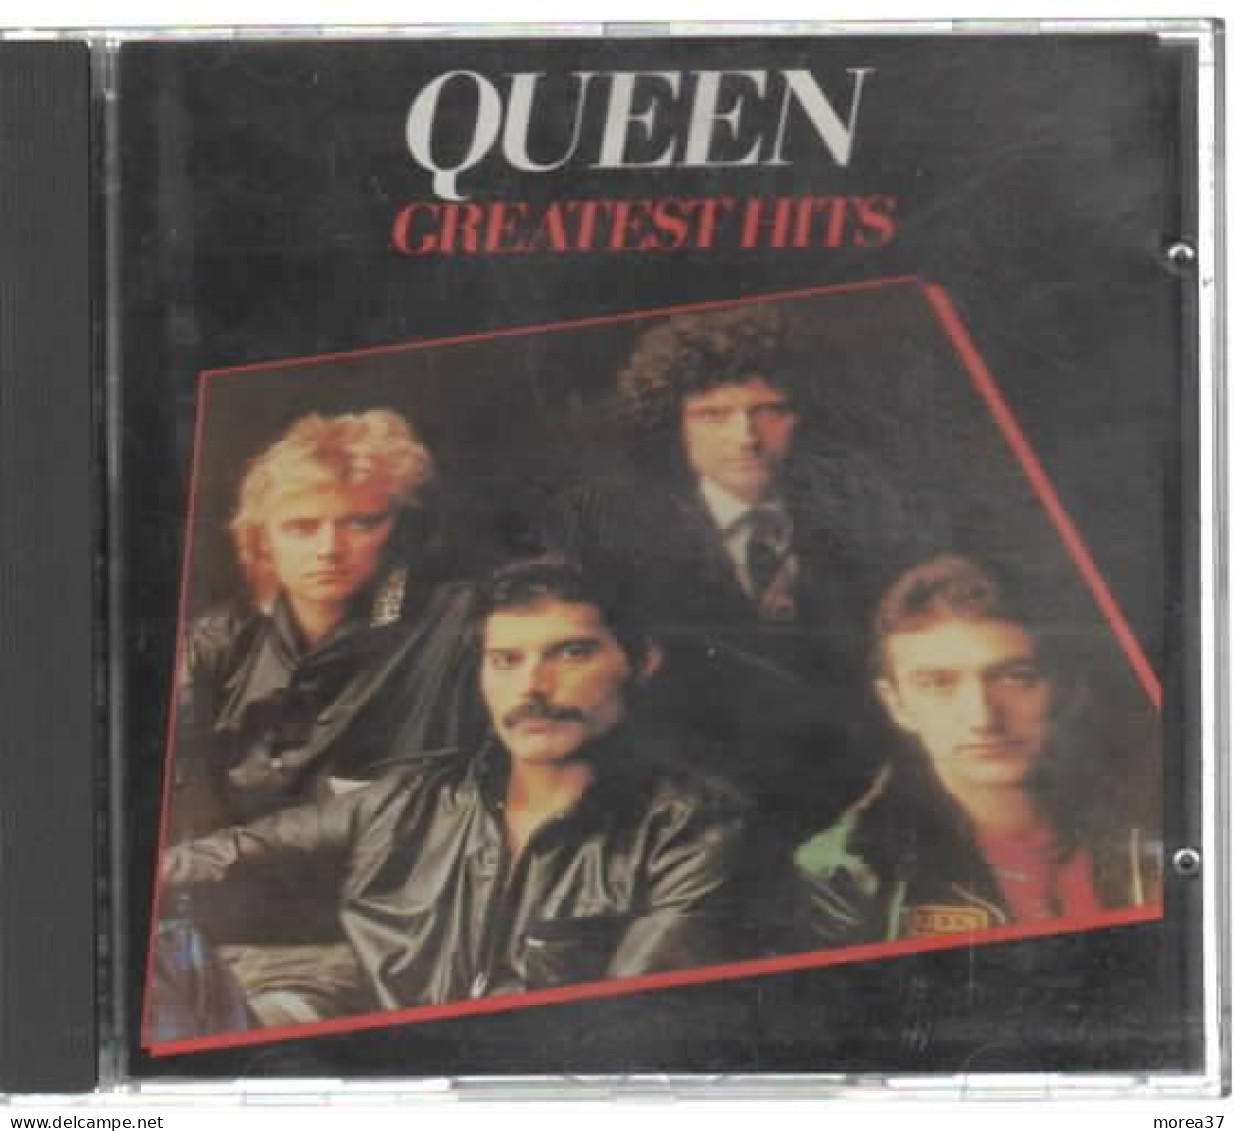 QUEEN Greatest Hits - Andere - Engelstalig